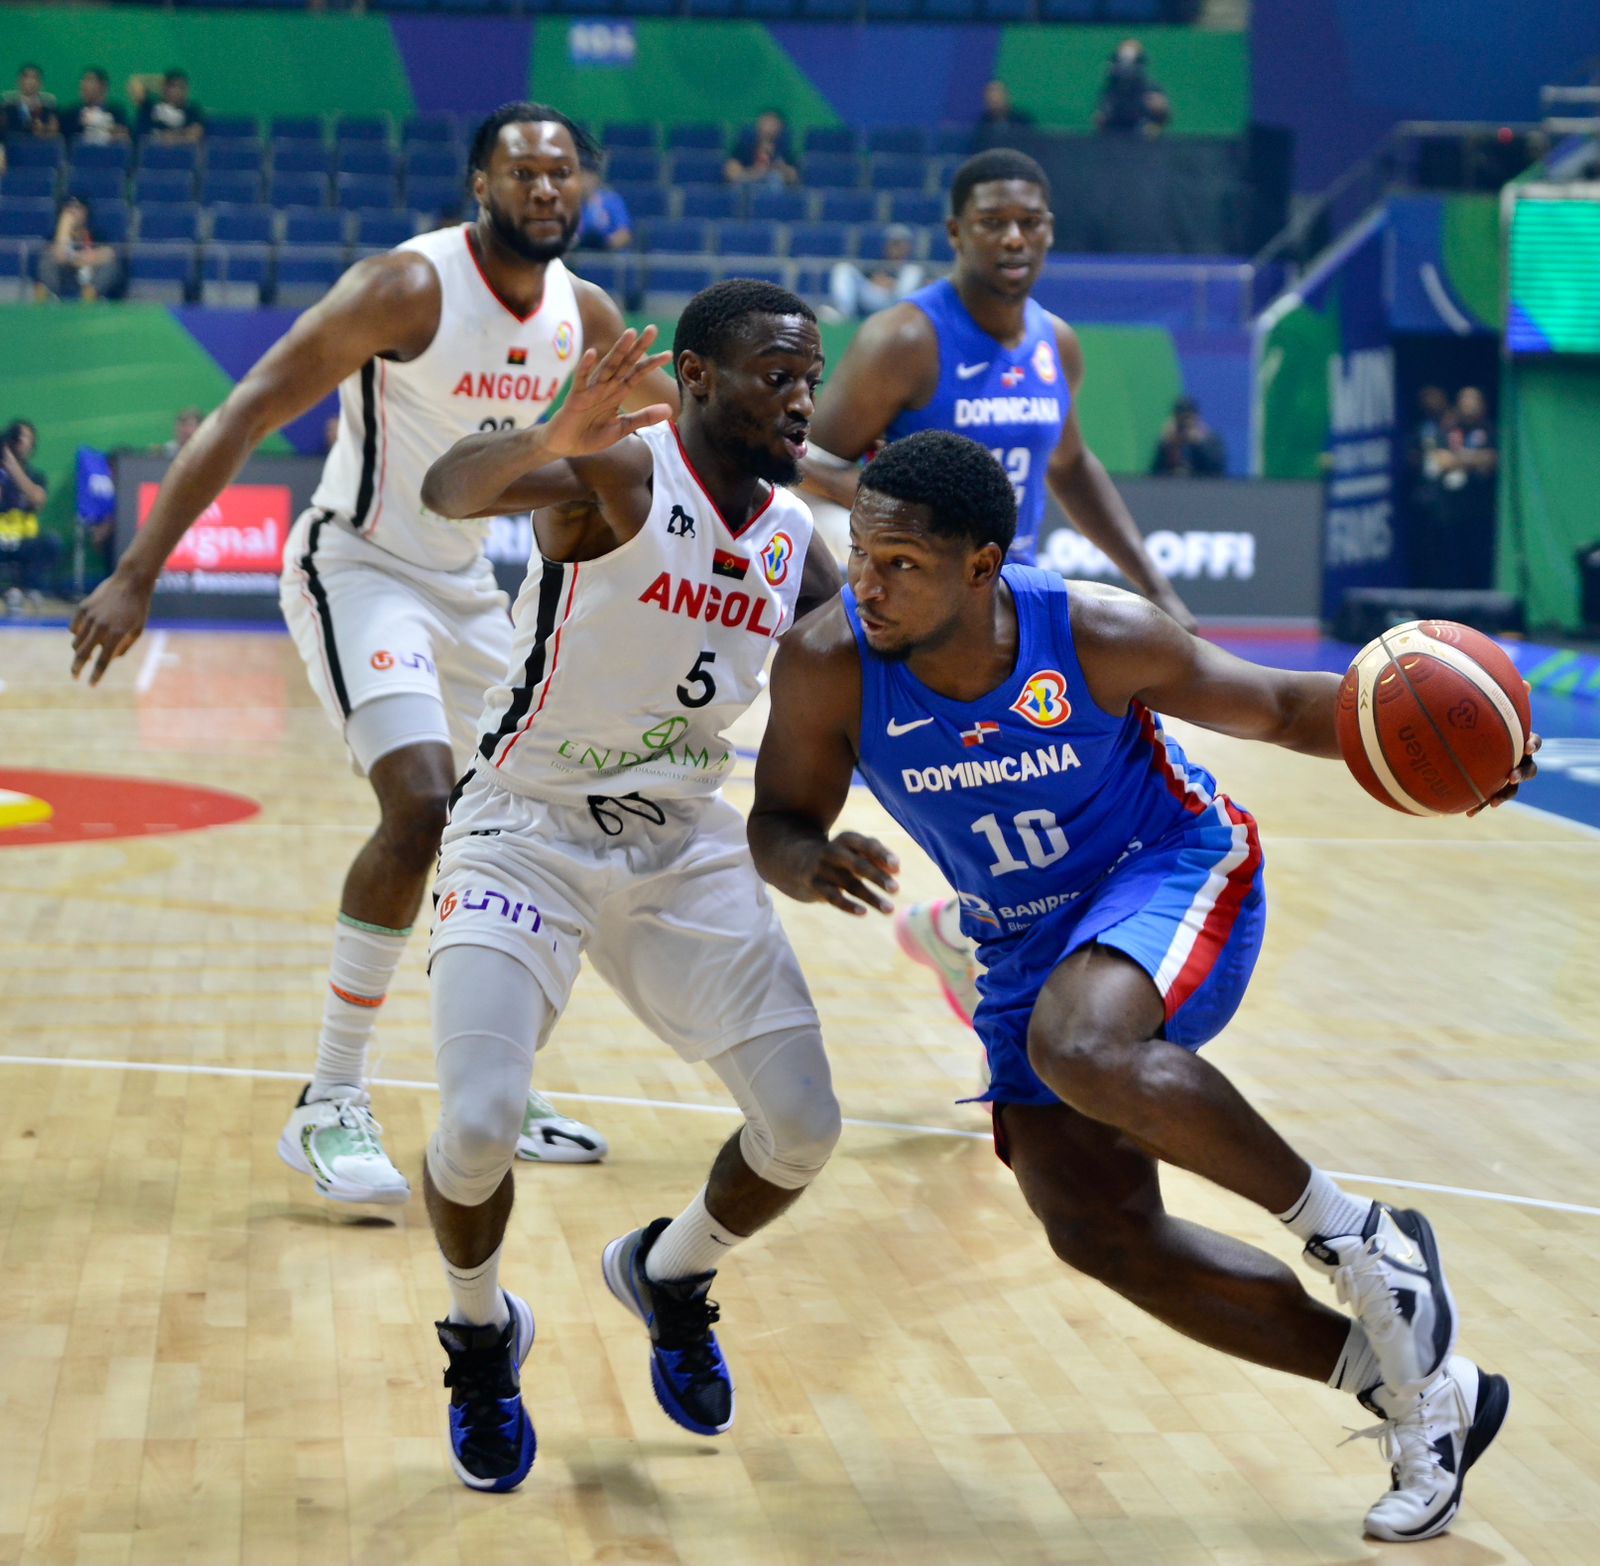 Dominicana vence a Angola y clasifica a segunda ronda del Mundial de Baloncesto